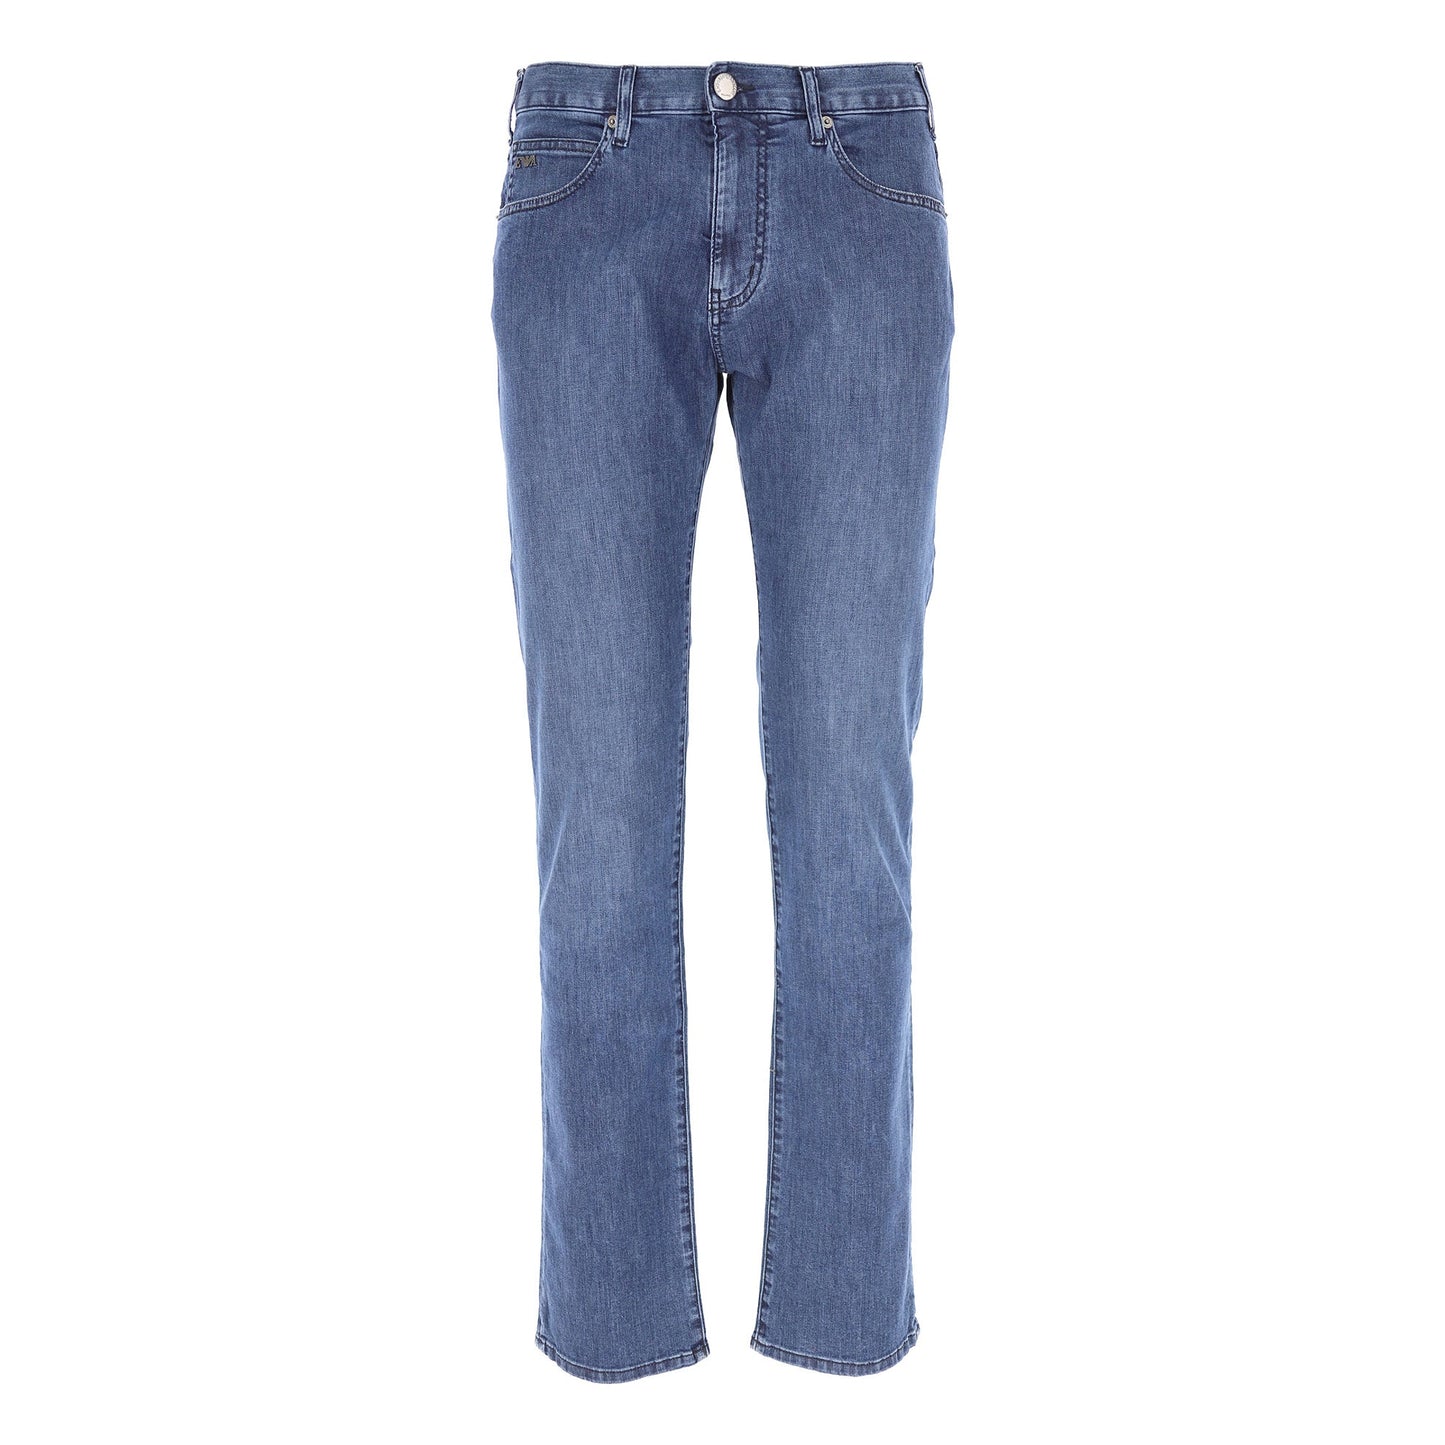 Emporio Armani 8N1J45 1D85Z Regular Fit Jeans - 0942 Blue Ch - Escape Menswear